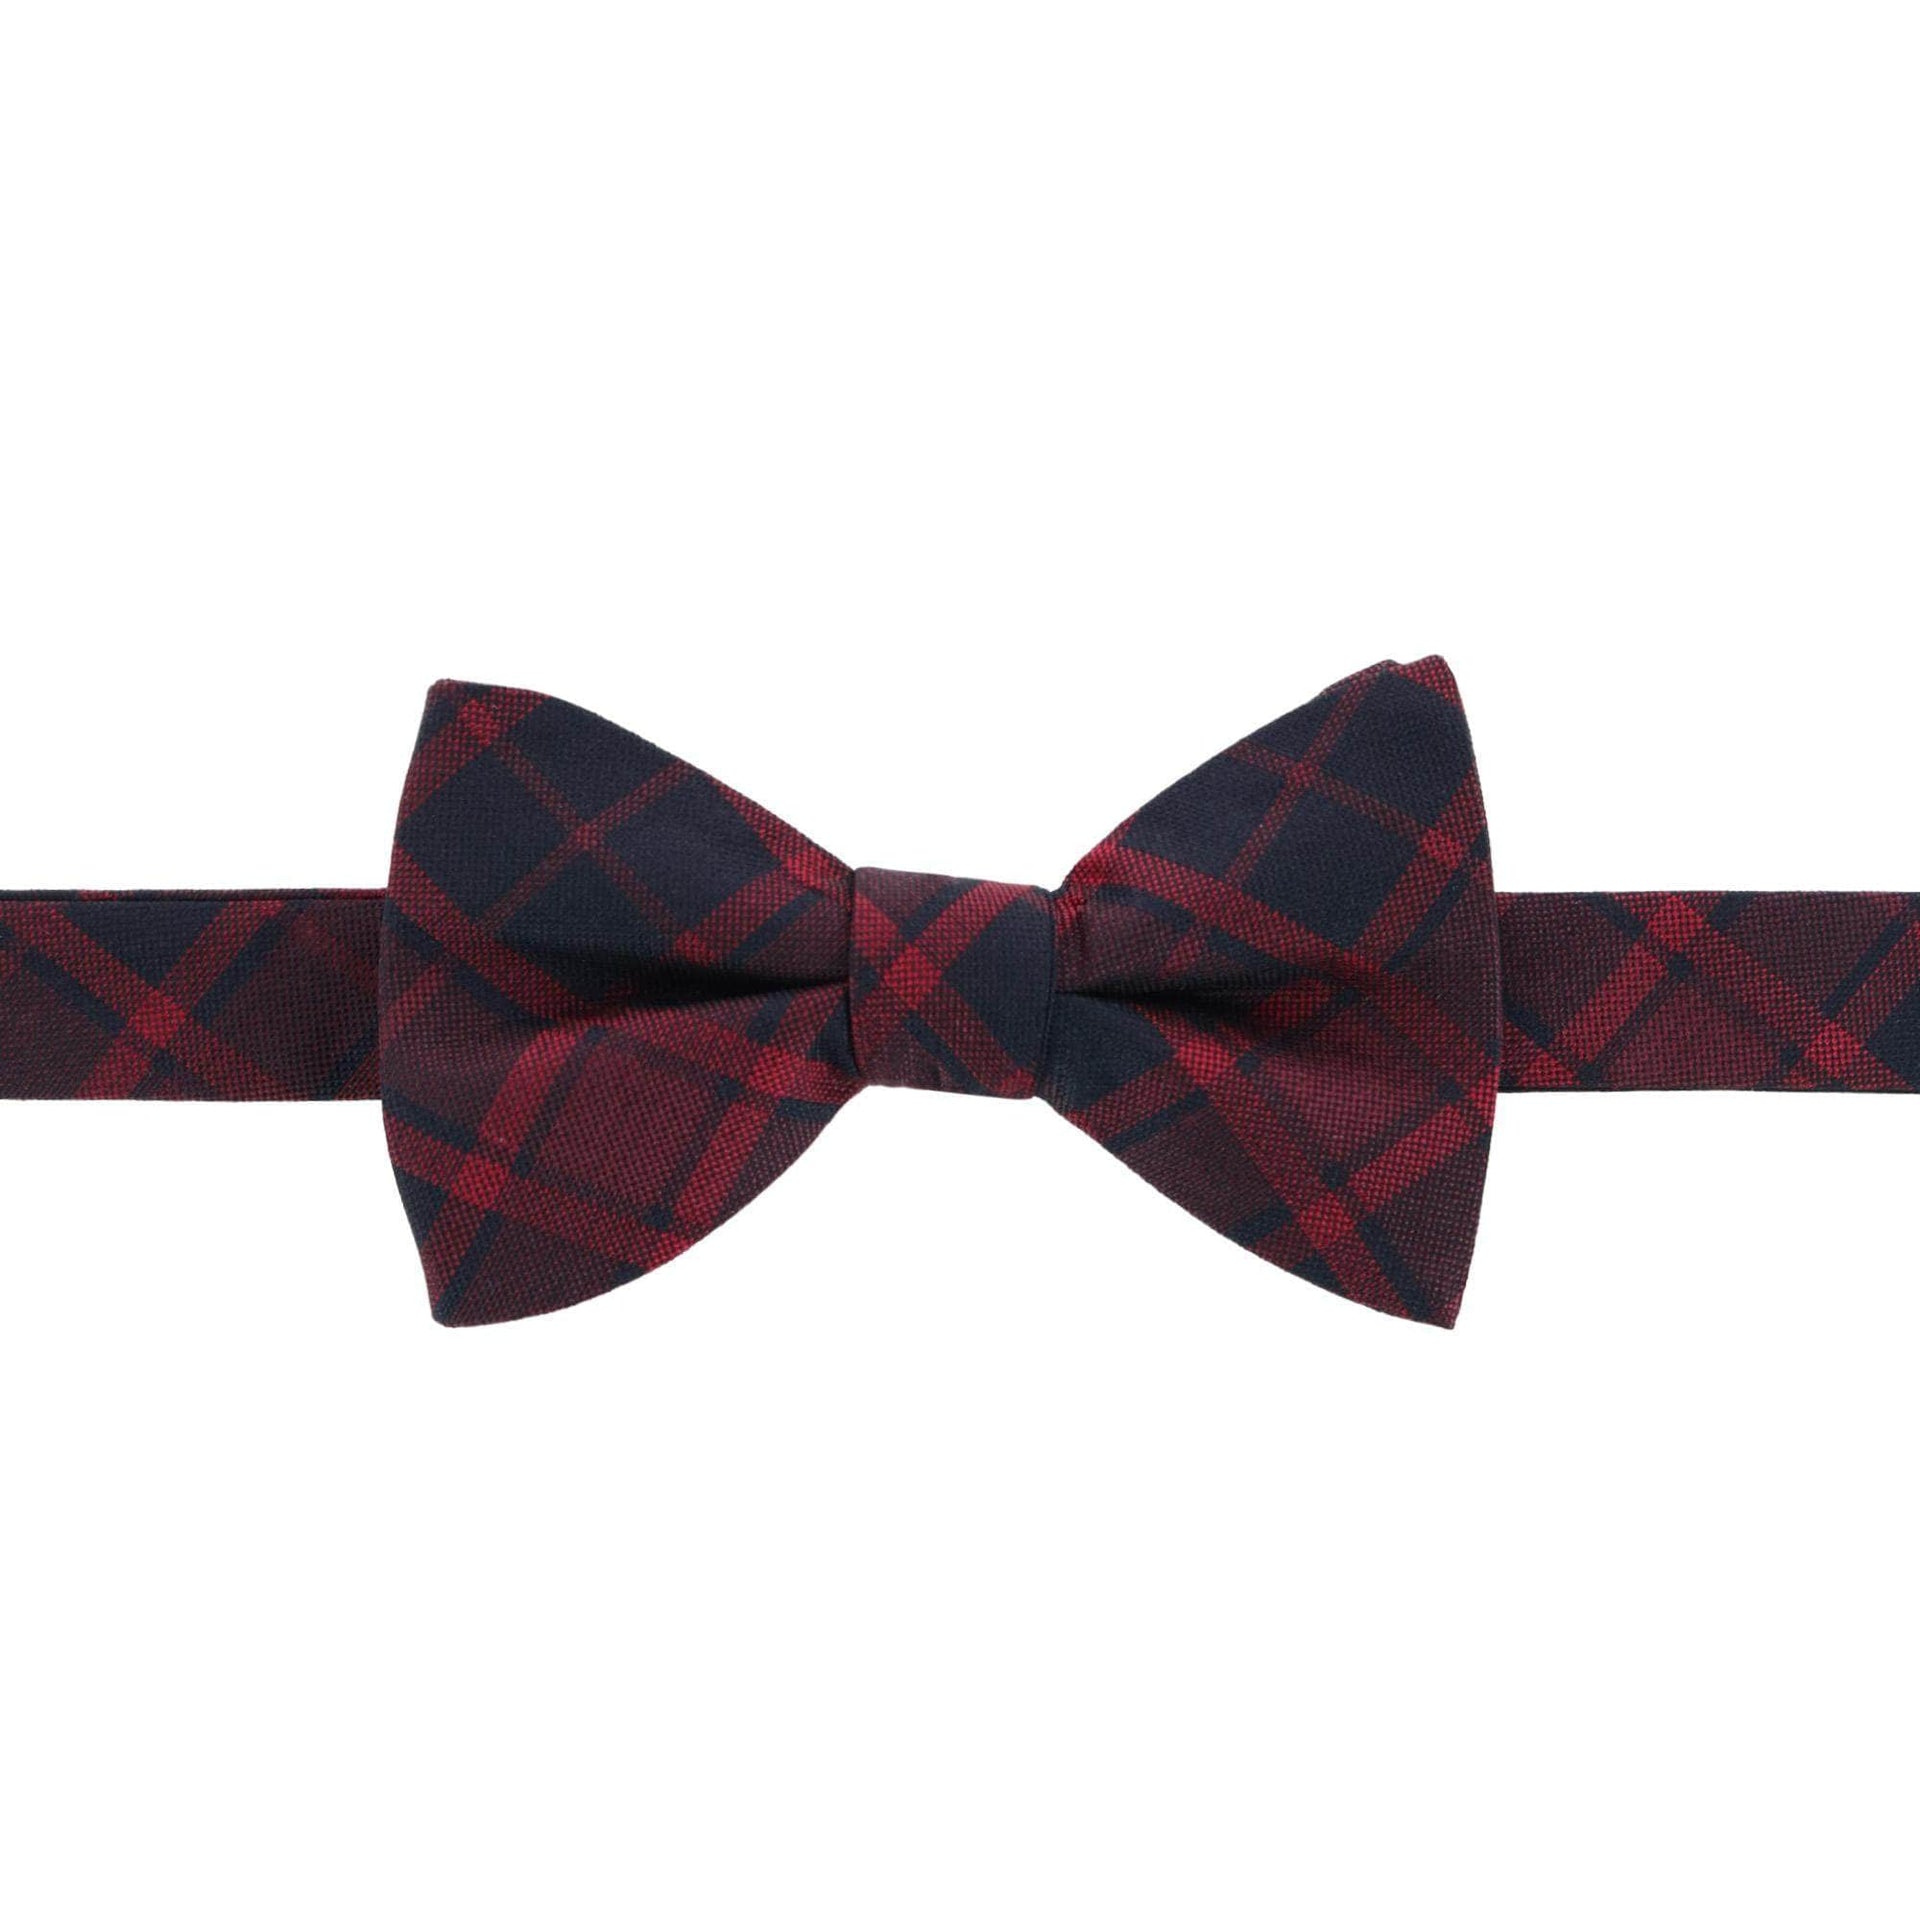 Kincade Red Blackwatch Plaid Silk Bow Tie